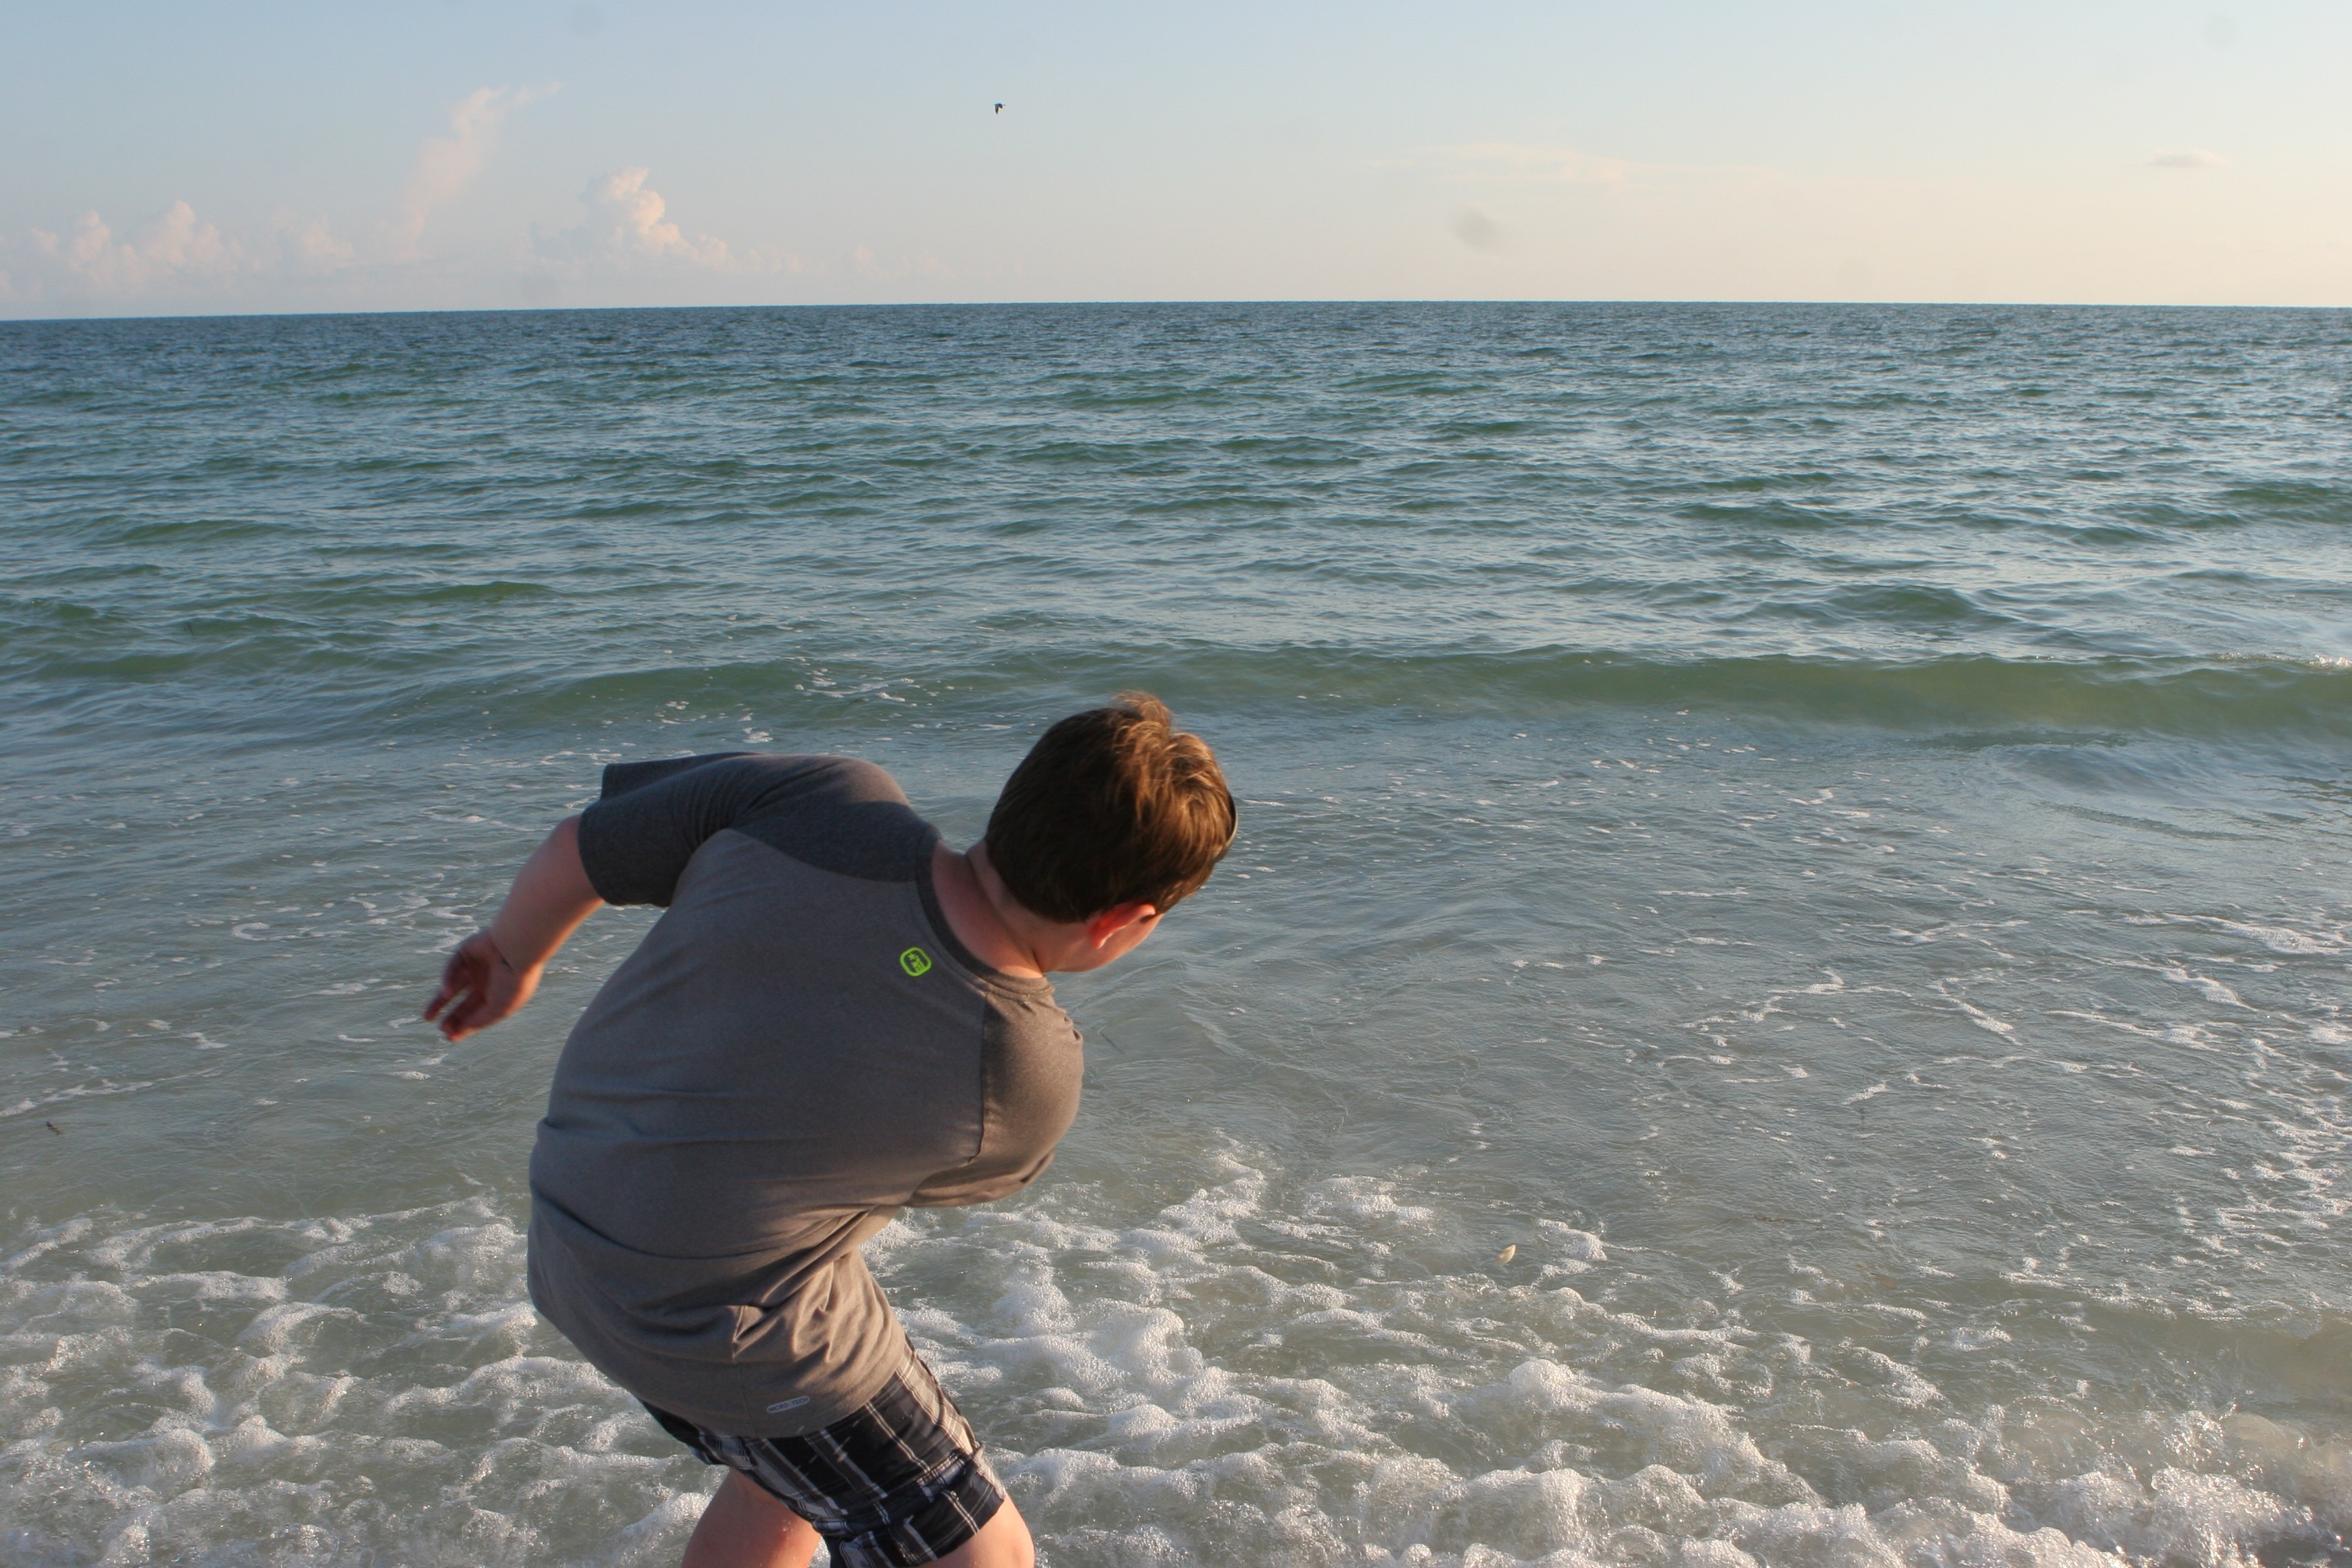 grant skipping rocks on honeymoon island beach